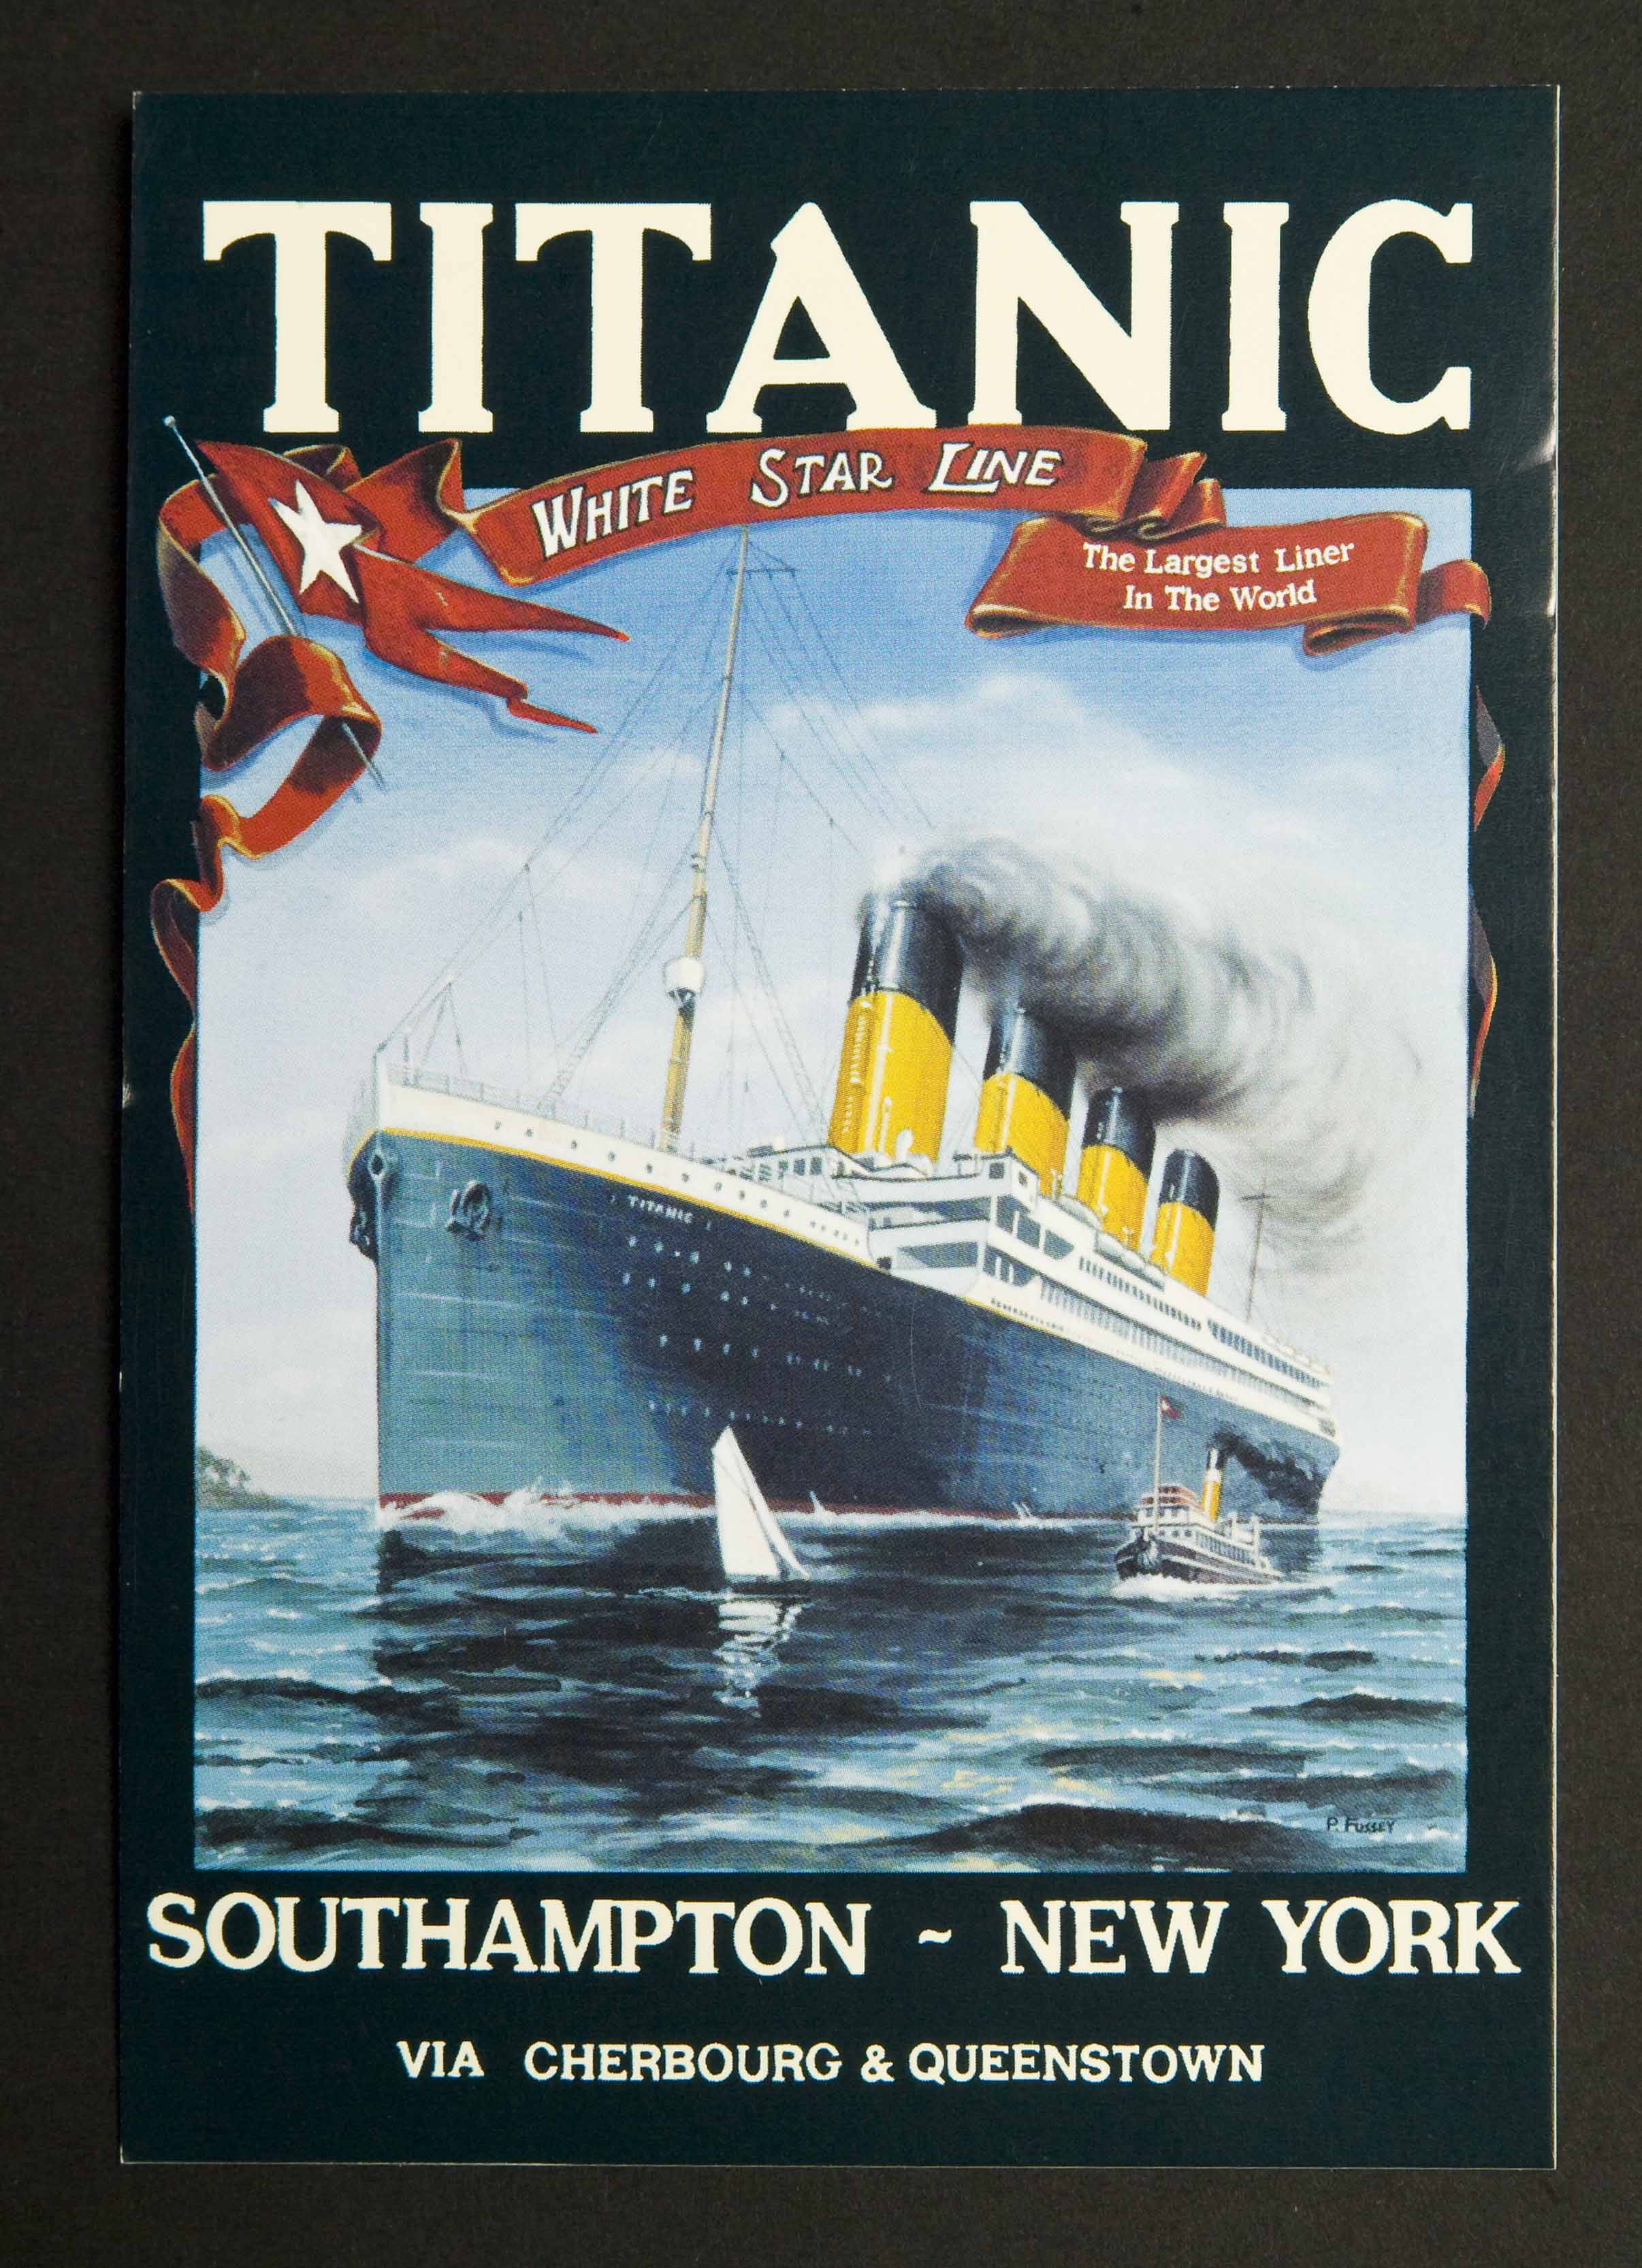 White Star Line Titanic A3 Poster